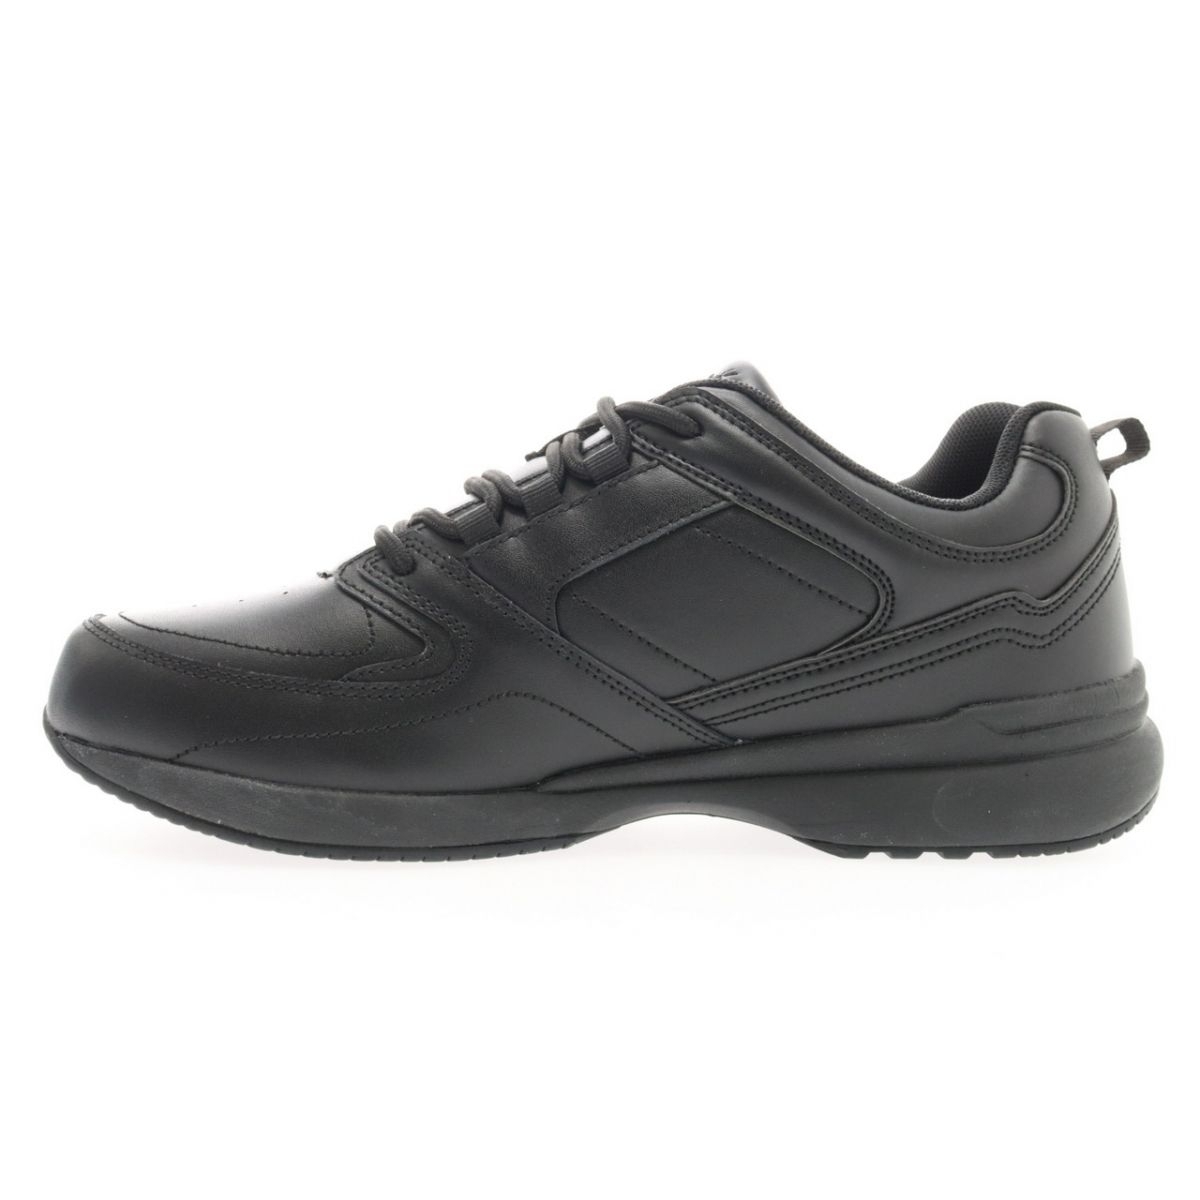 Propet Men's Life Walker Sport Sneaker Black - MAA272LBLK BLACK - BLACK, 10.5